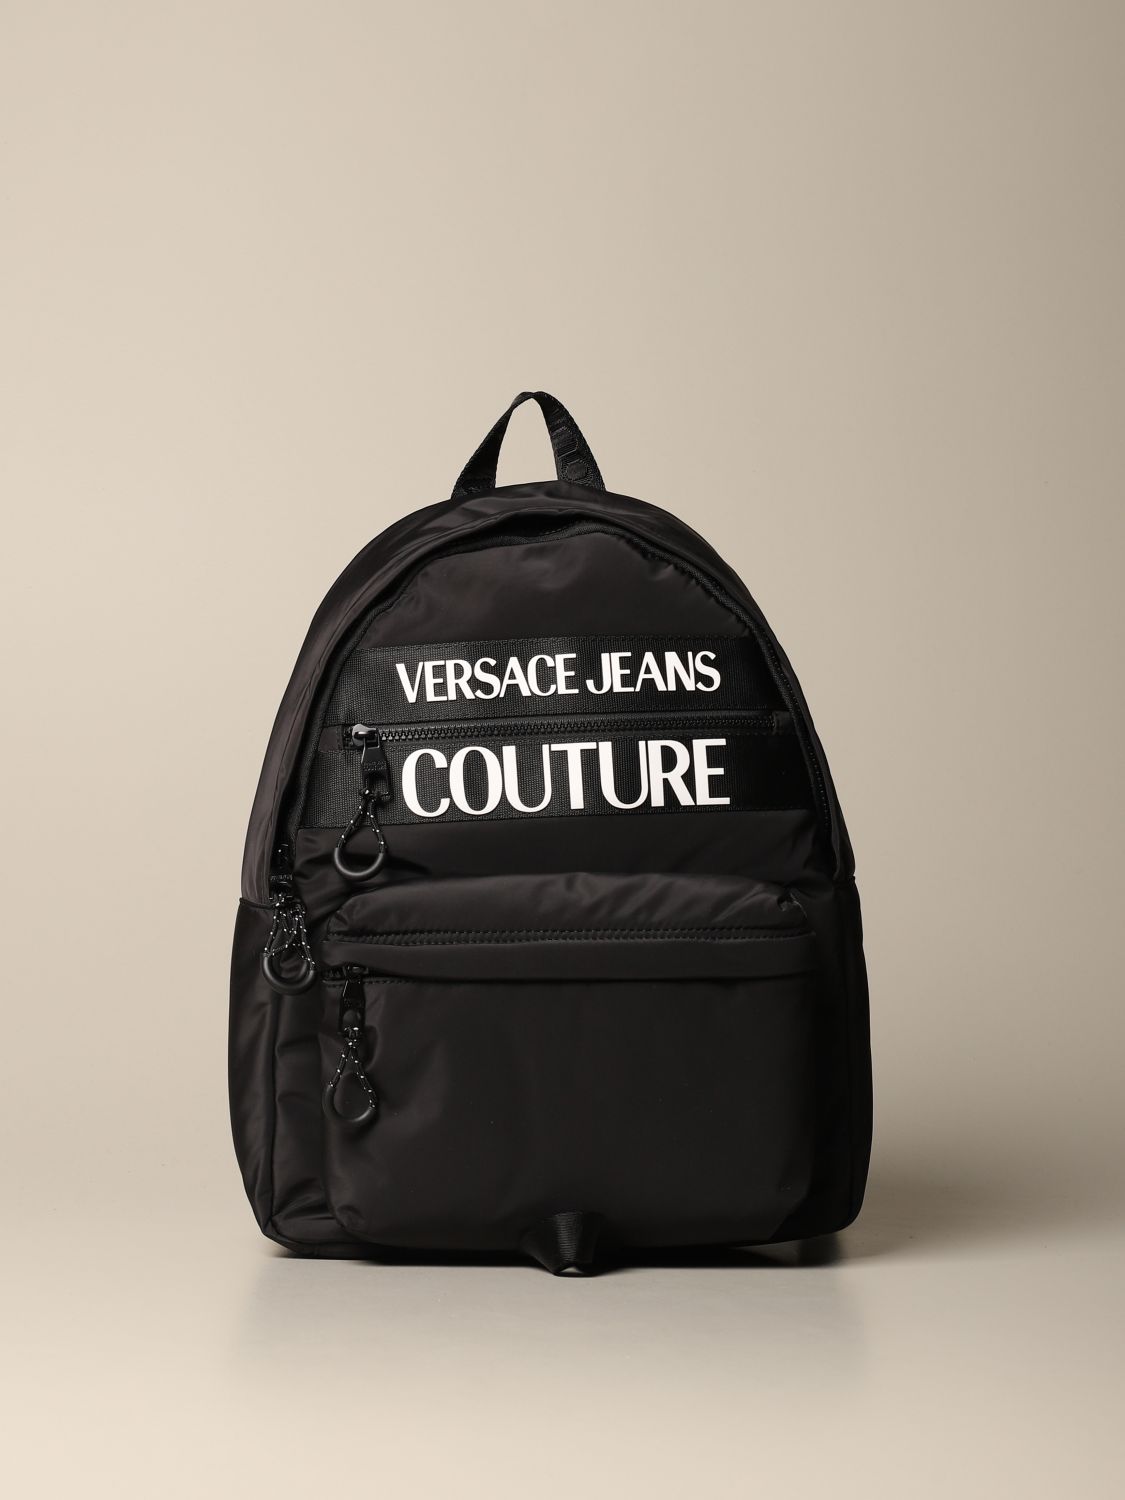 versace jeans backpack mens